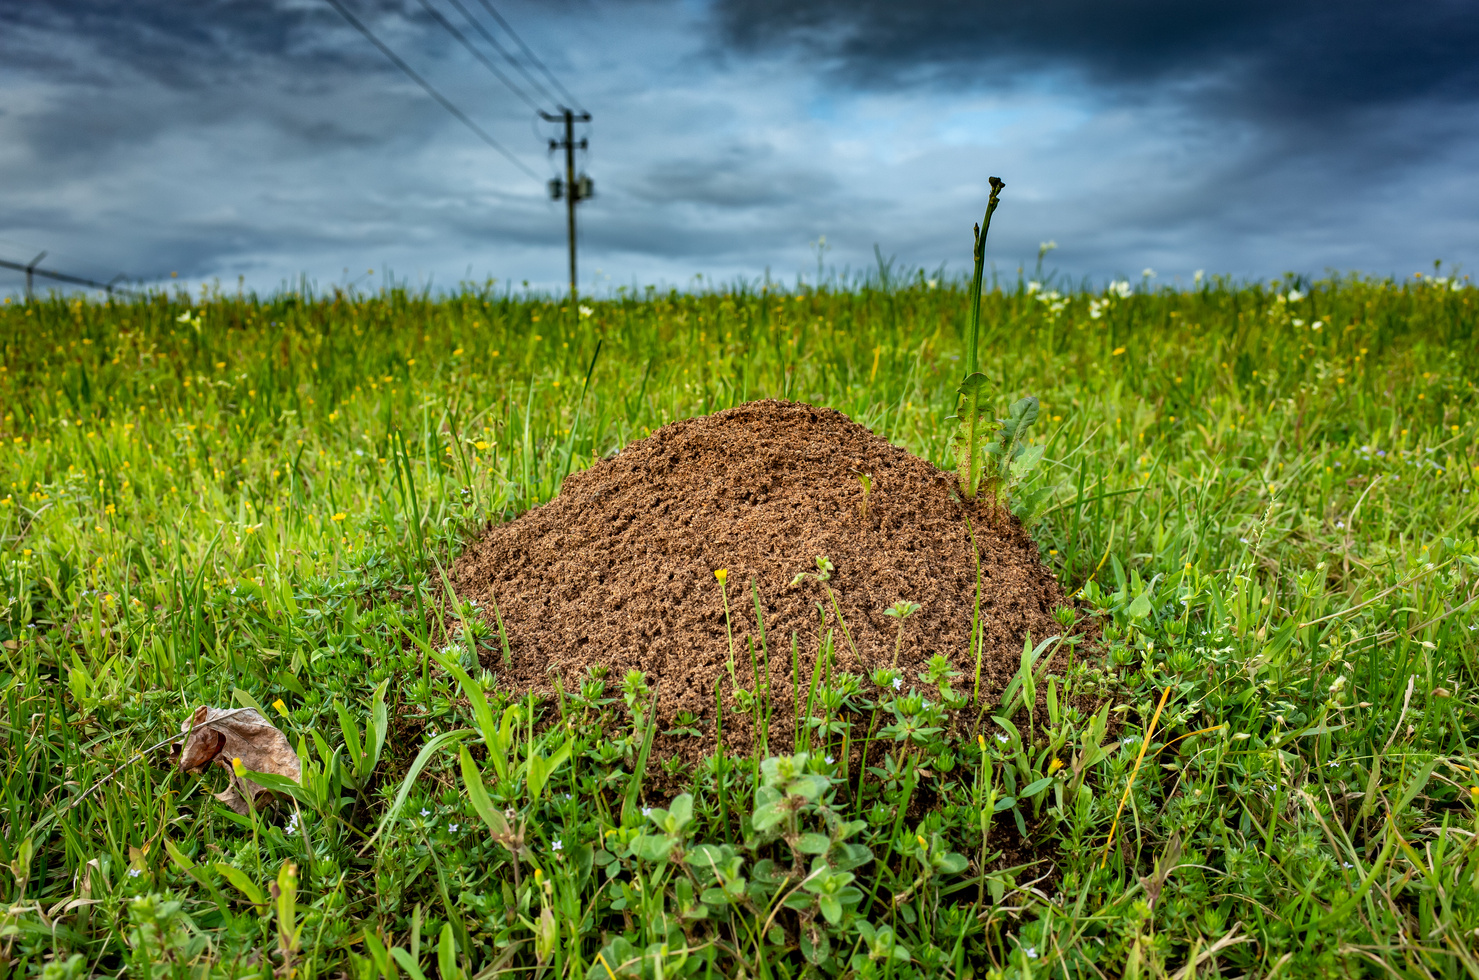 Ant Mound in Grass